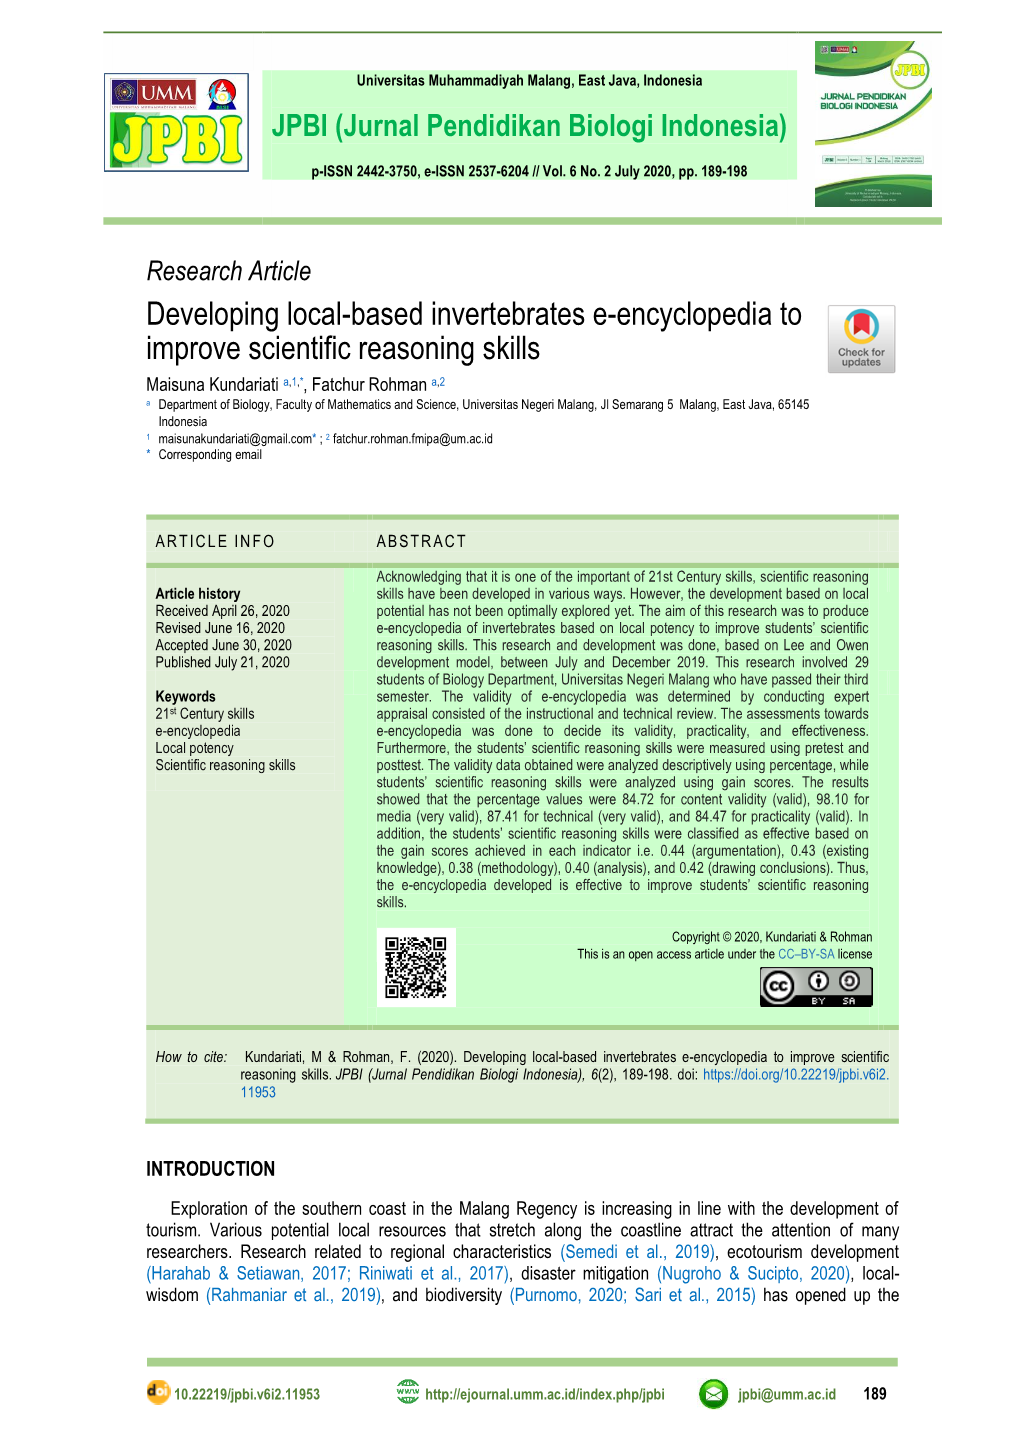 Developing Local-Based Invertebrates E-Encyclopedia to Improve Scientific Reasoning Skills